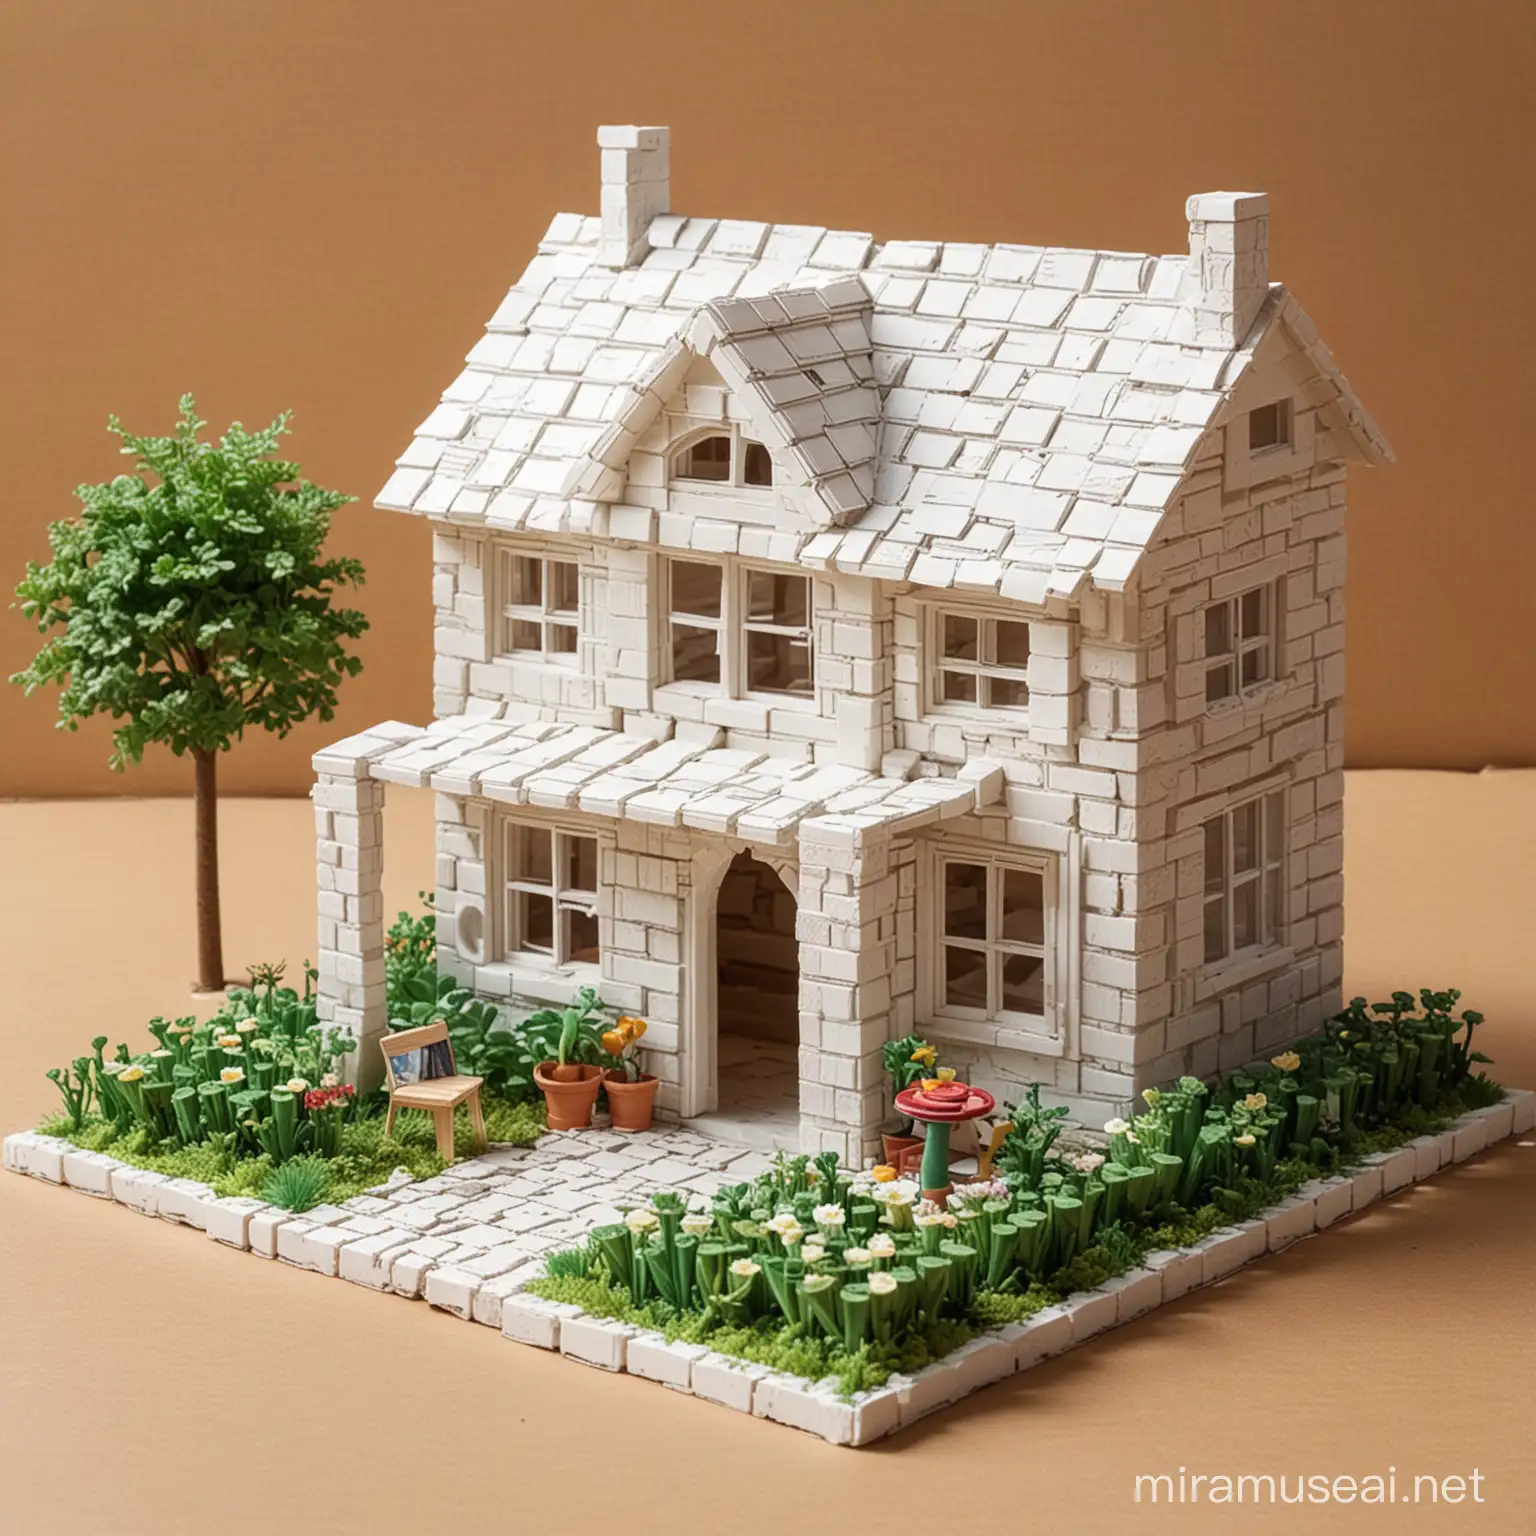 Front View Toy Design Kit with Mini White Bricks and Garden